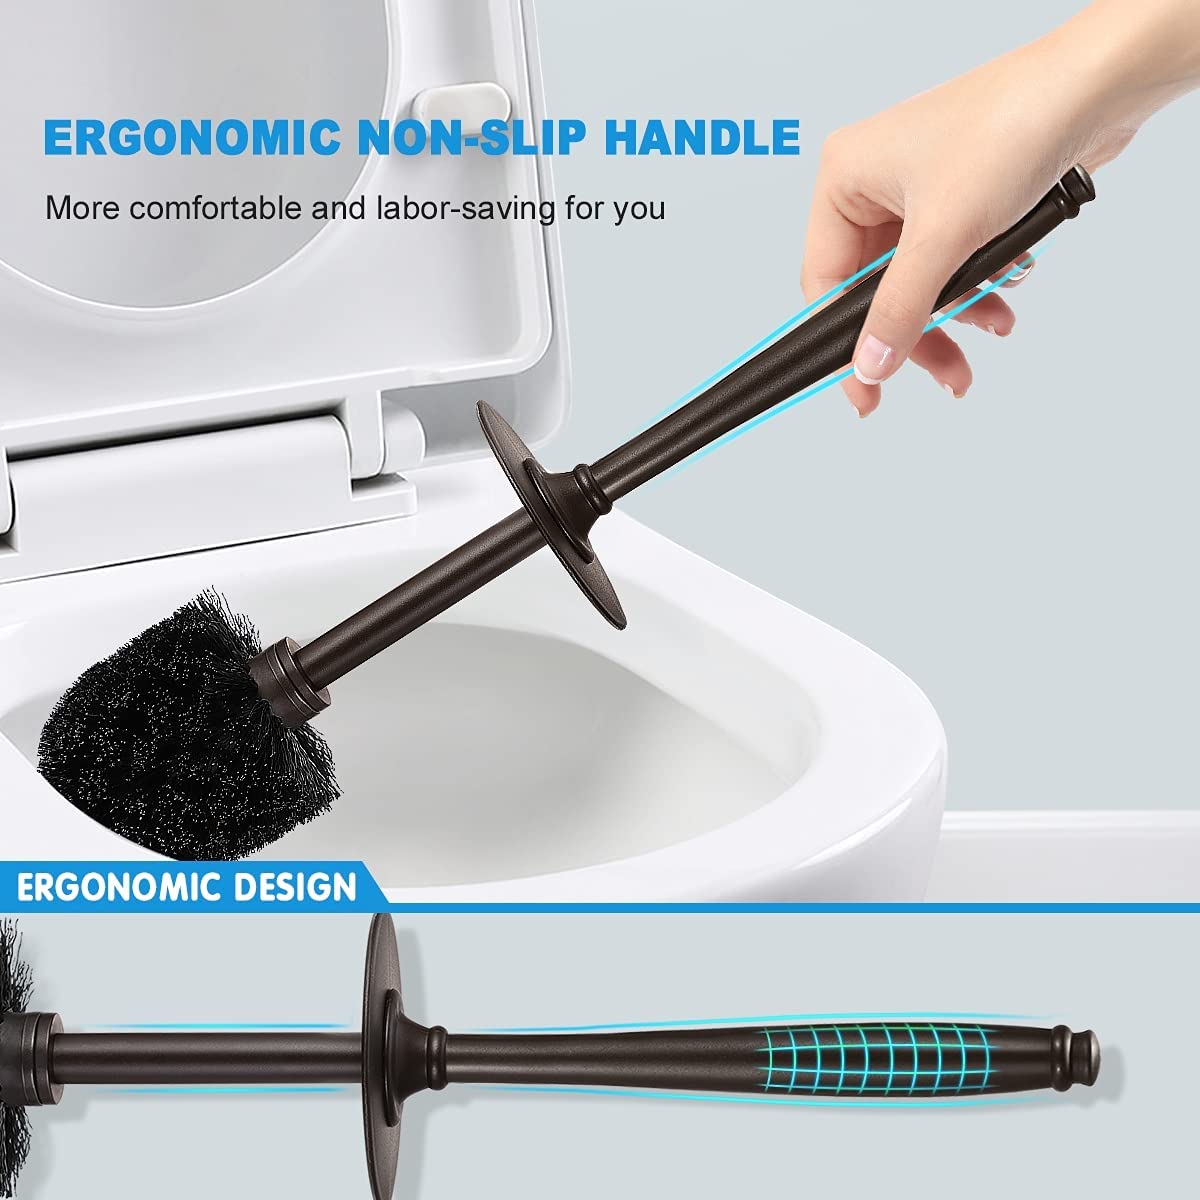 Ergonomic Toilet Brush and Holder